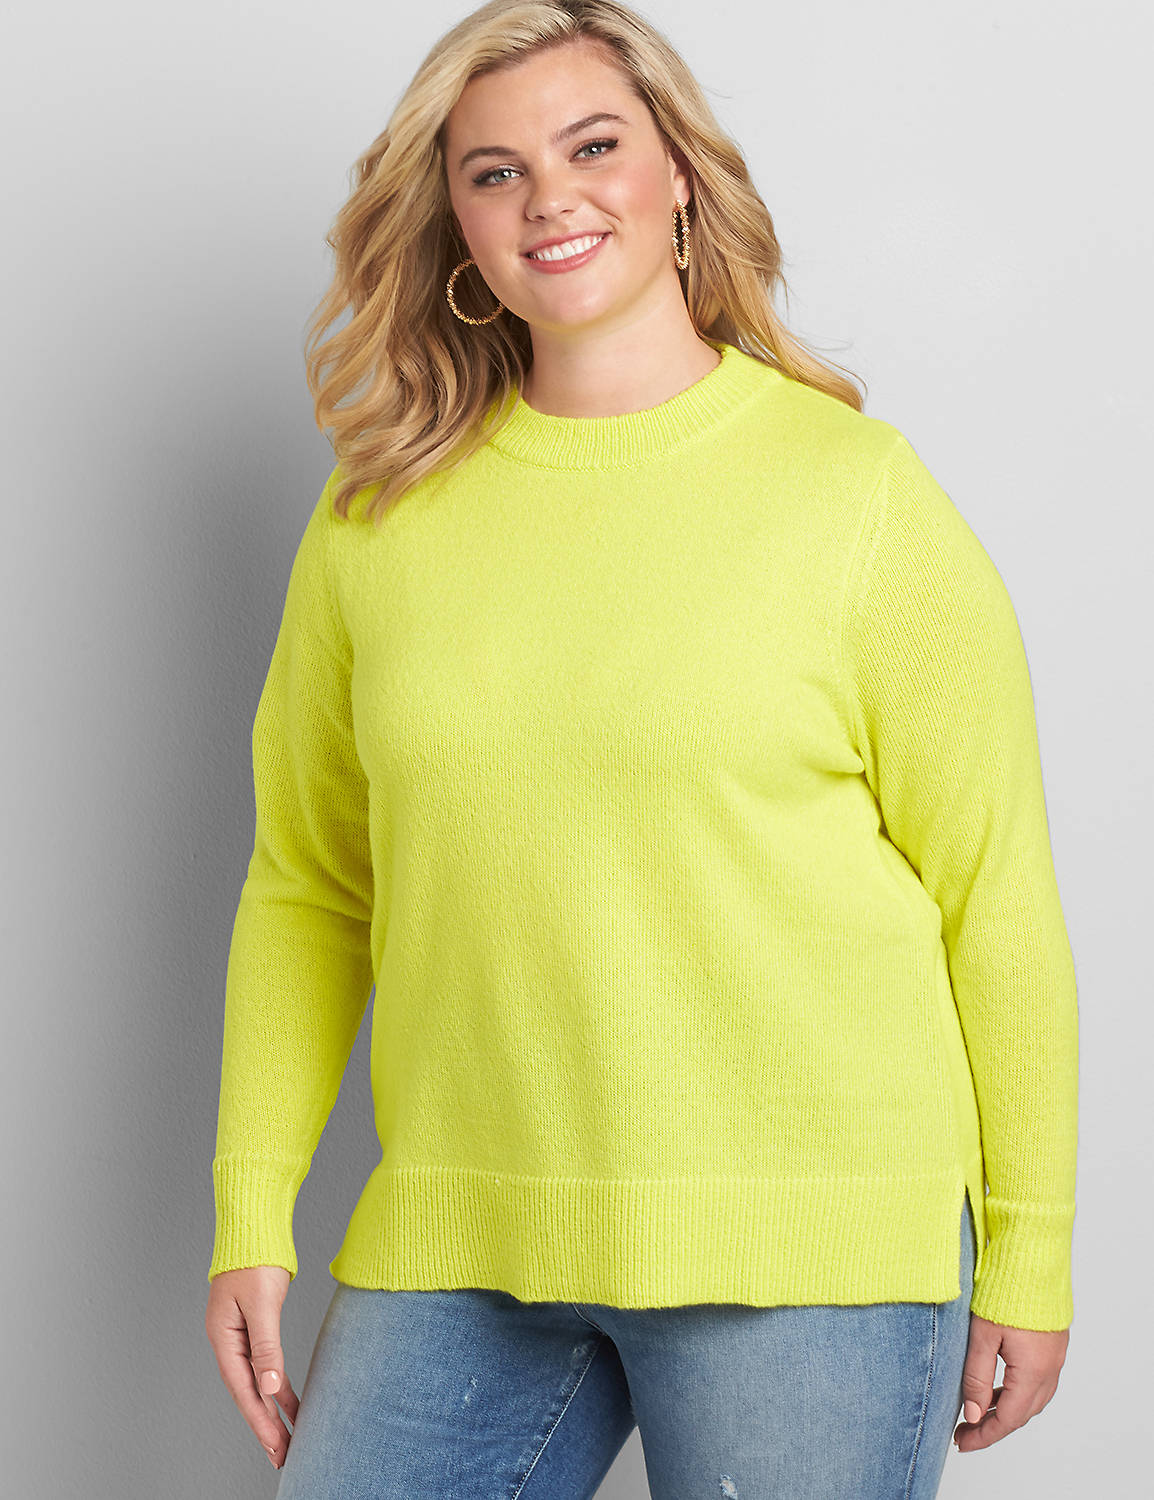 Long Sleeve Crew Neck Sweater in Neon Yarn 1117040:PANTONE Limeade:18/20 Product Image 1